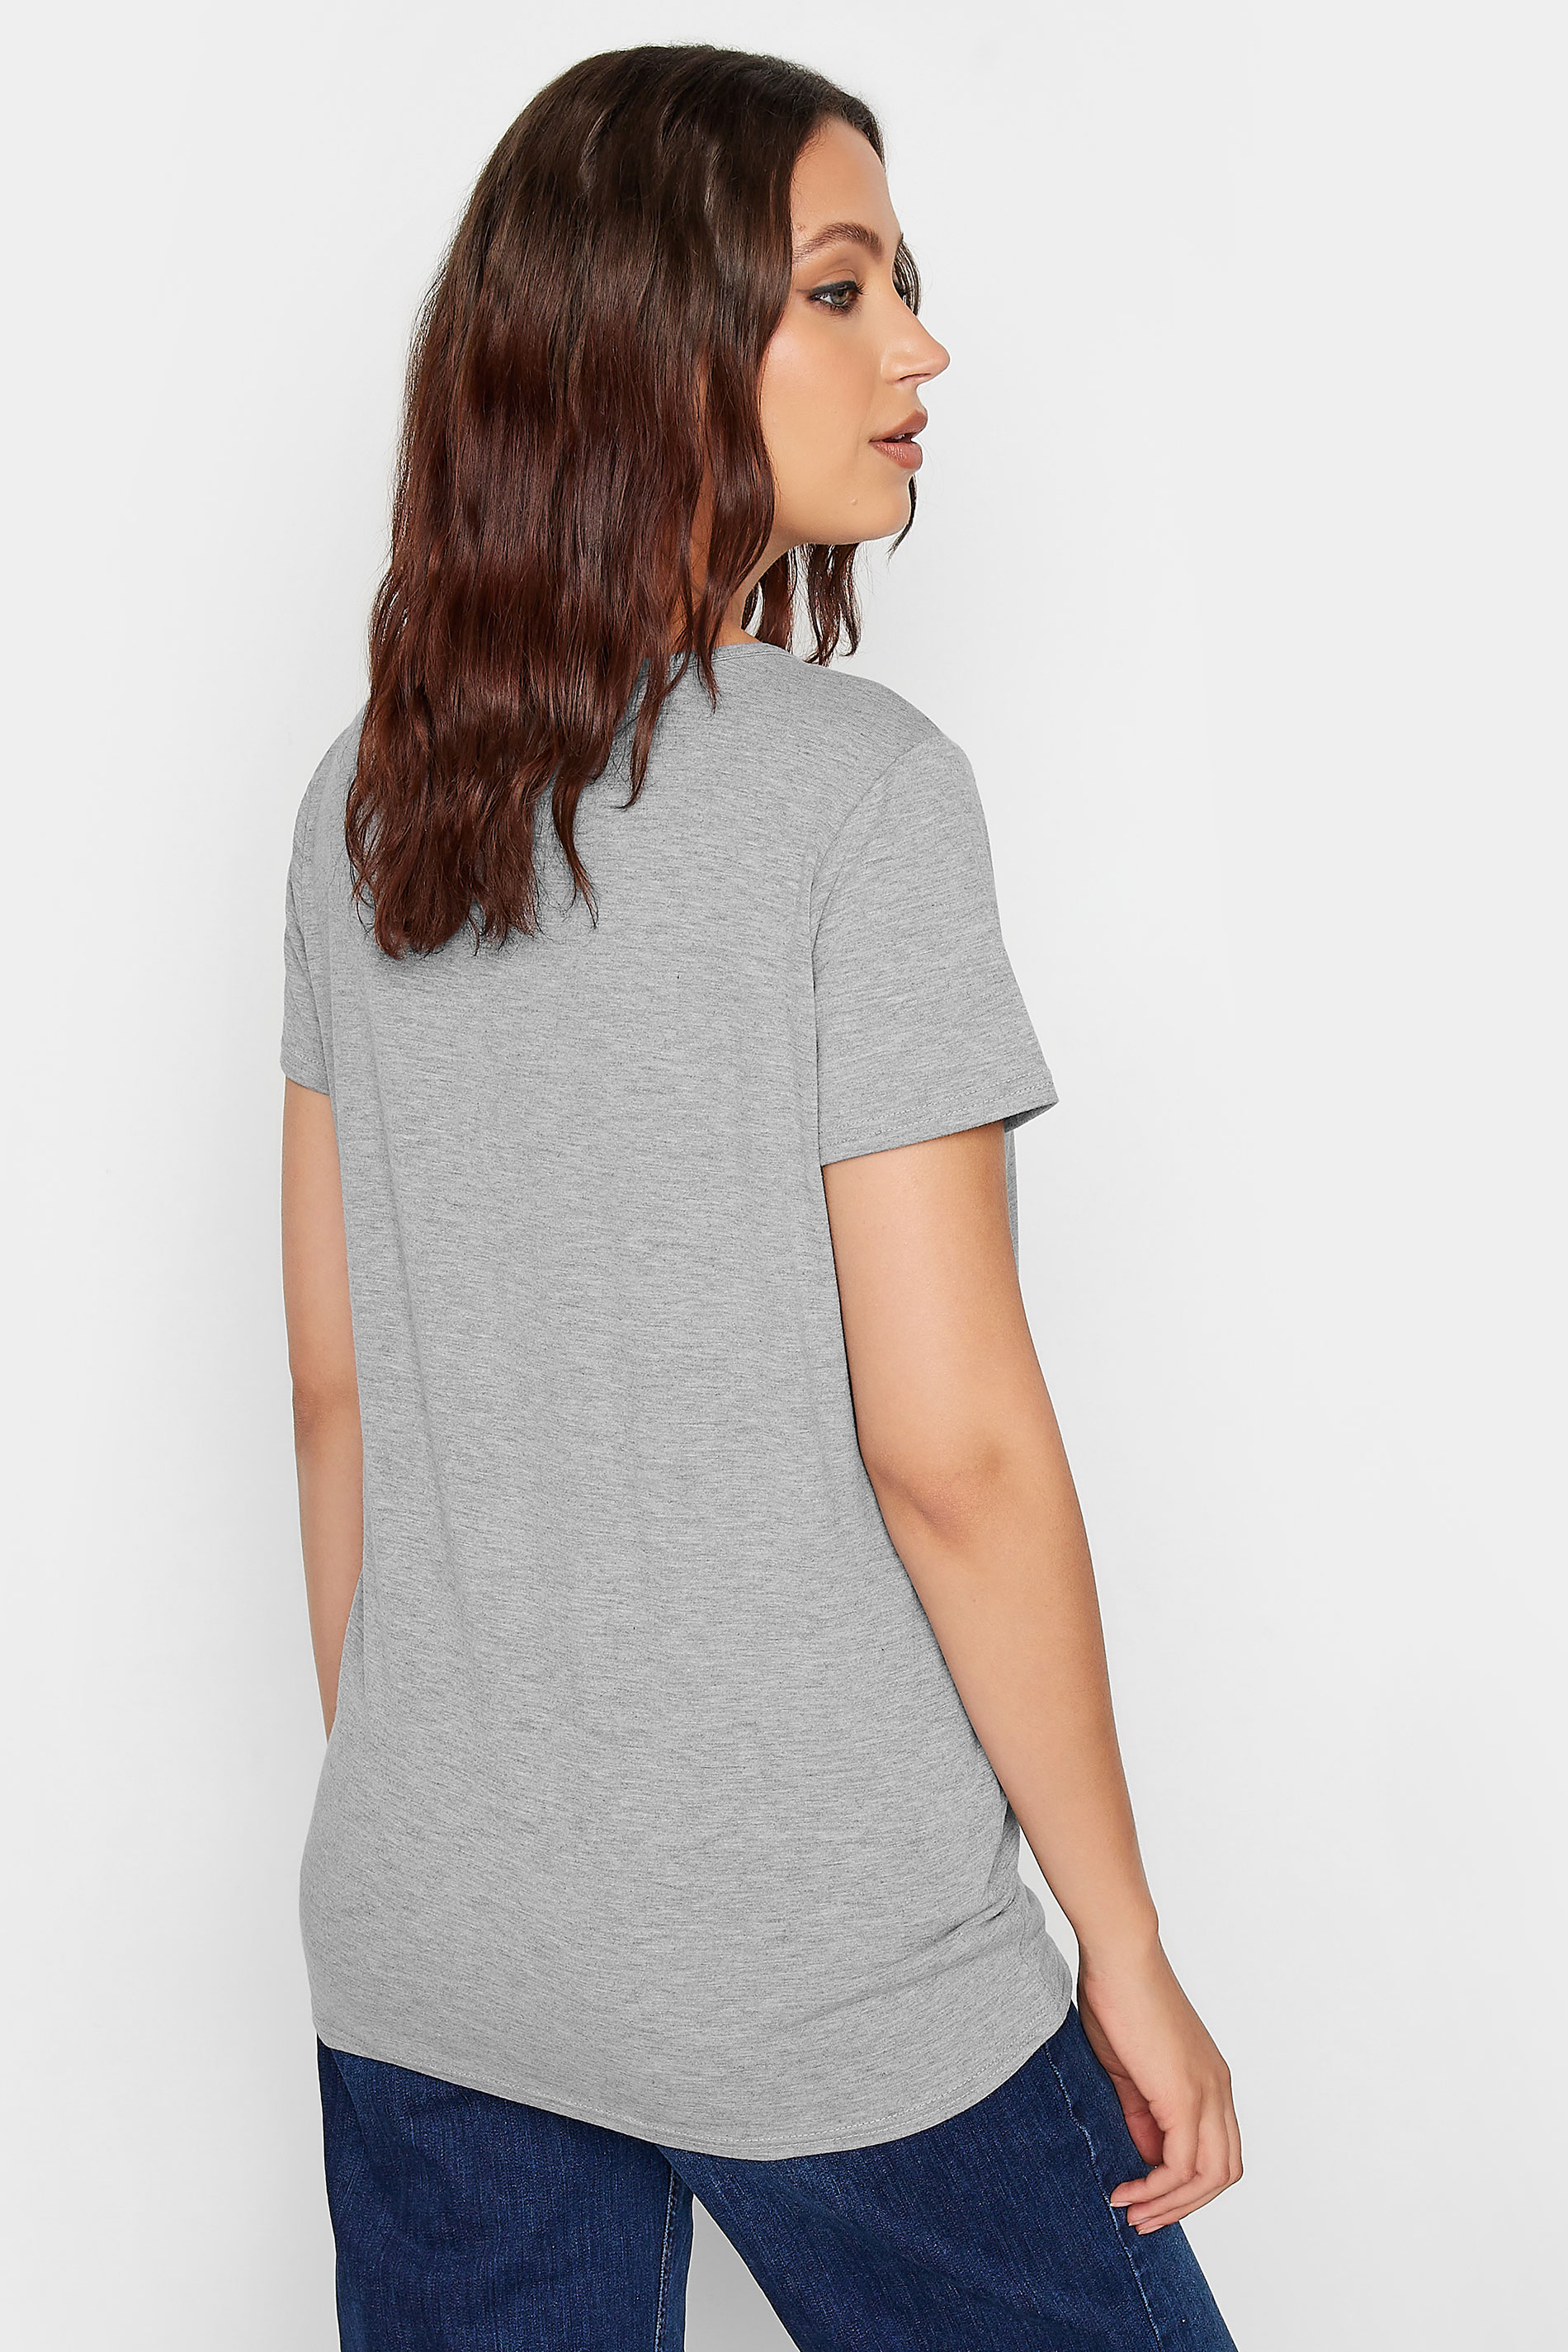 LTS Tall Women's Grey V-Neck T-Shirt | Long Tall Sally 3